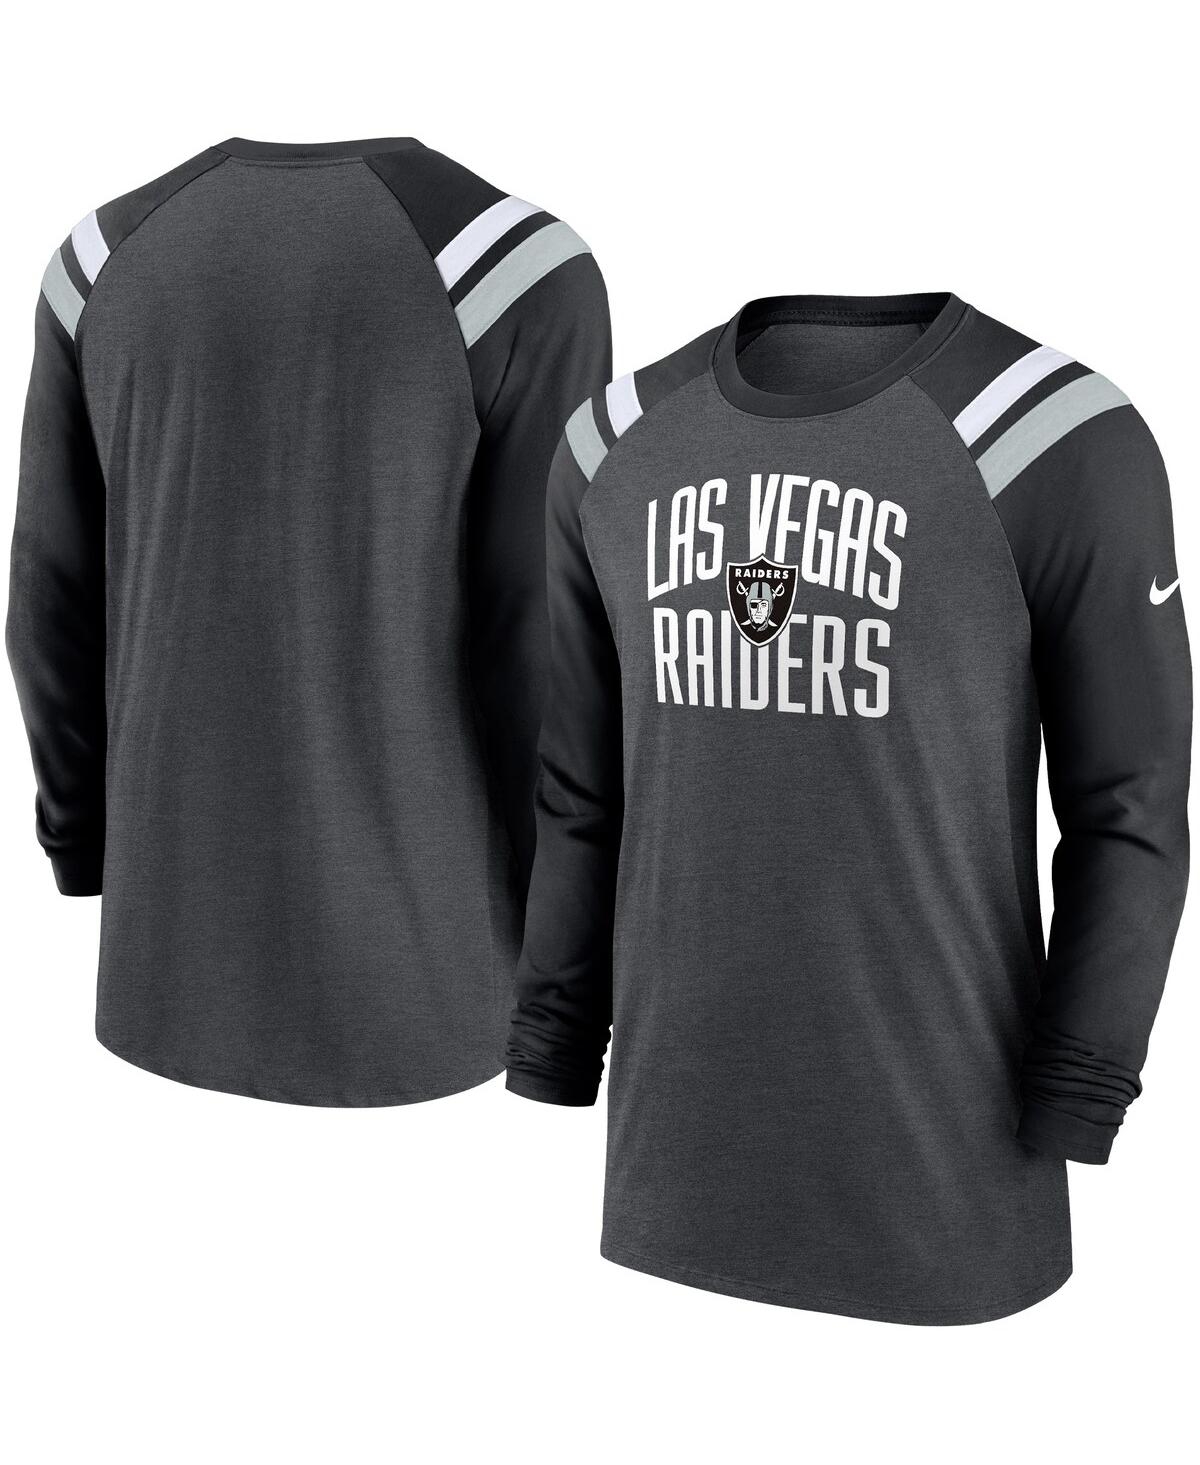 Shop Nike Men's  Heathered Charcoal, Black Las Vegas Raiders Tri-blend Raglan Athletic Long Sleeve Fashion In Heathered Charcoal,black